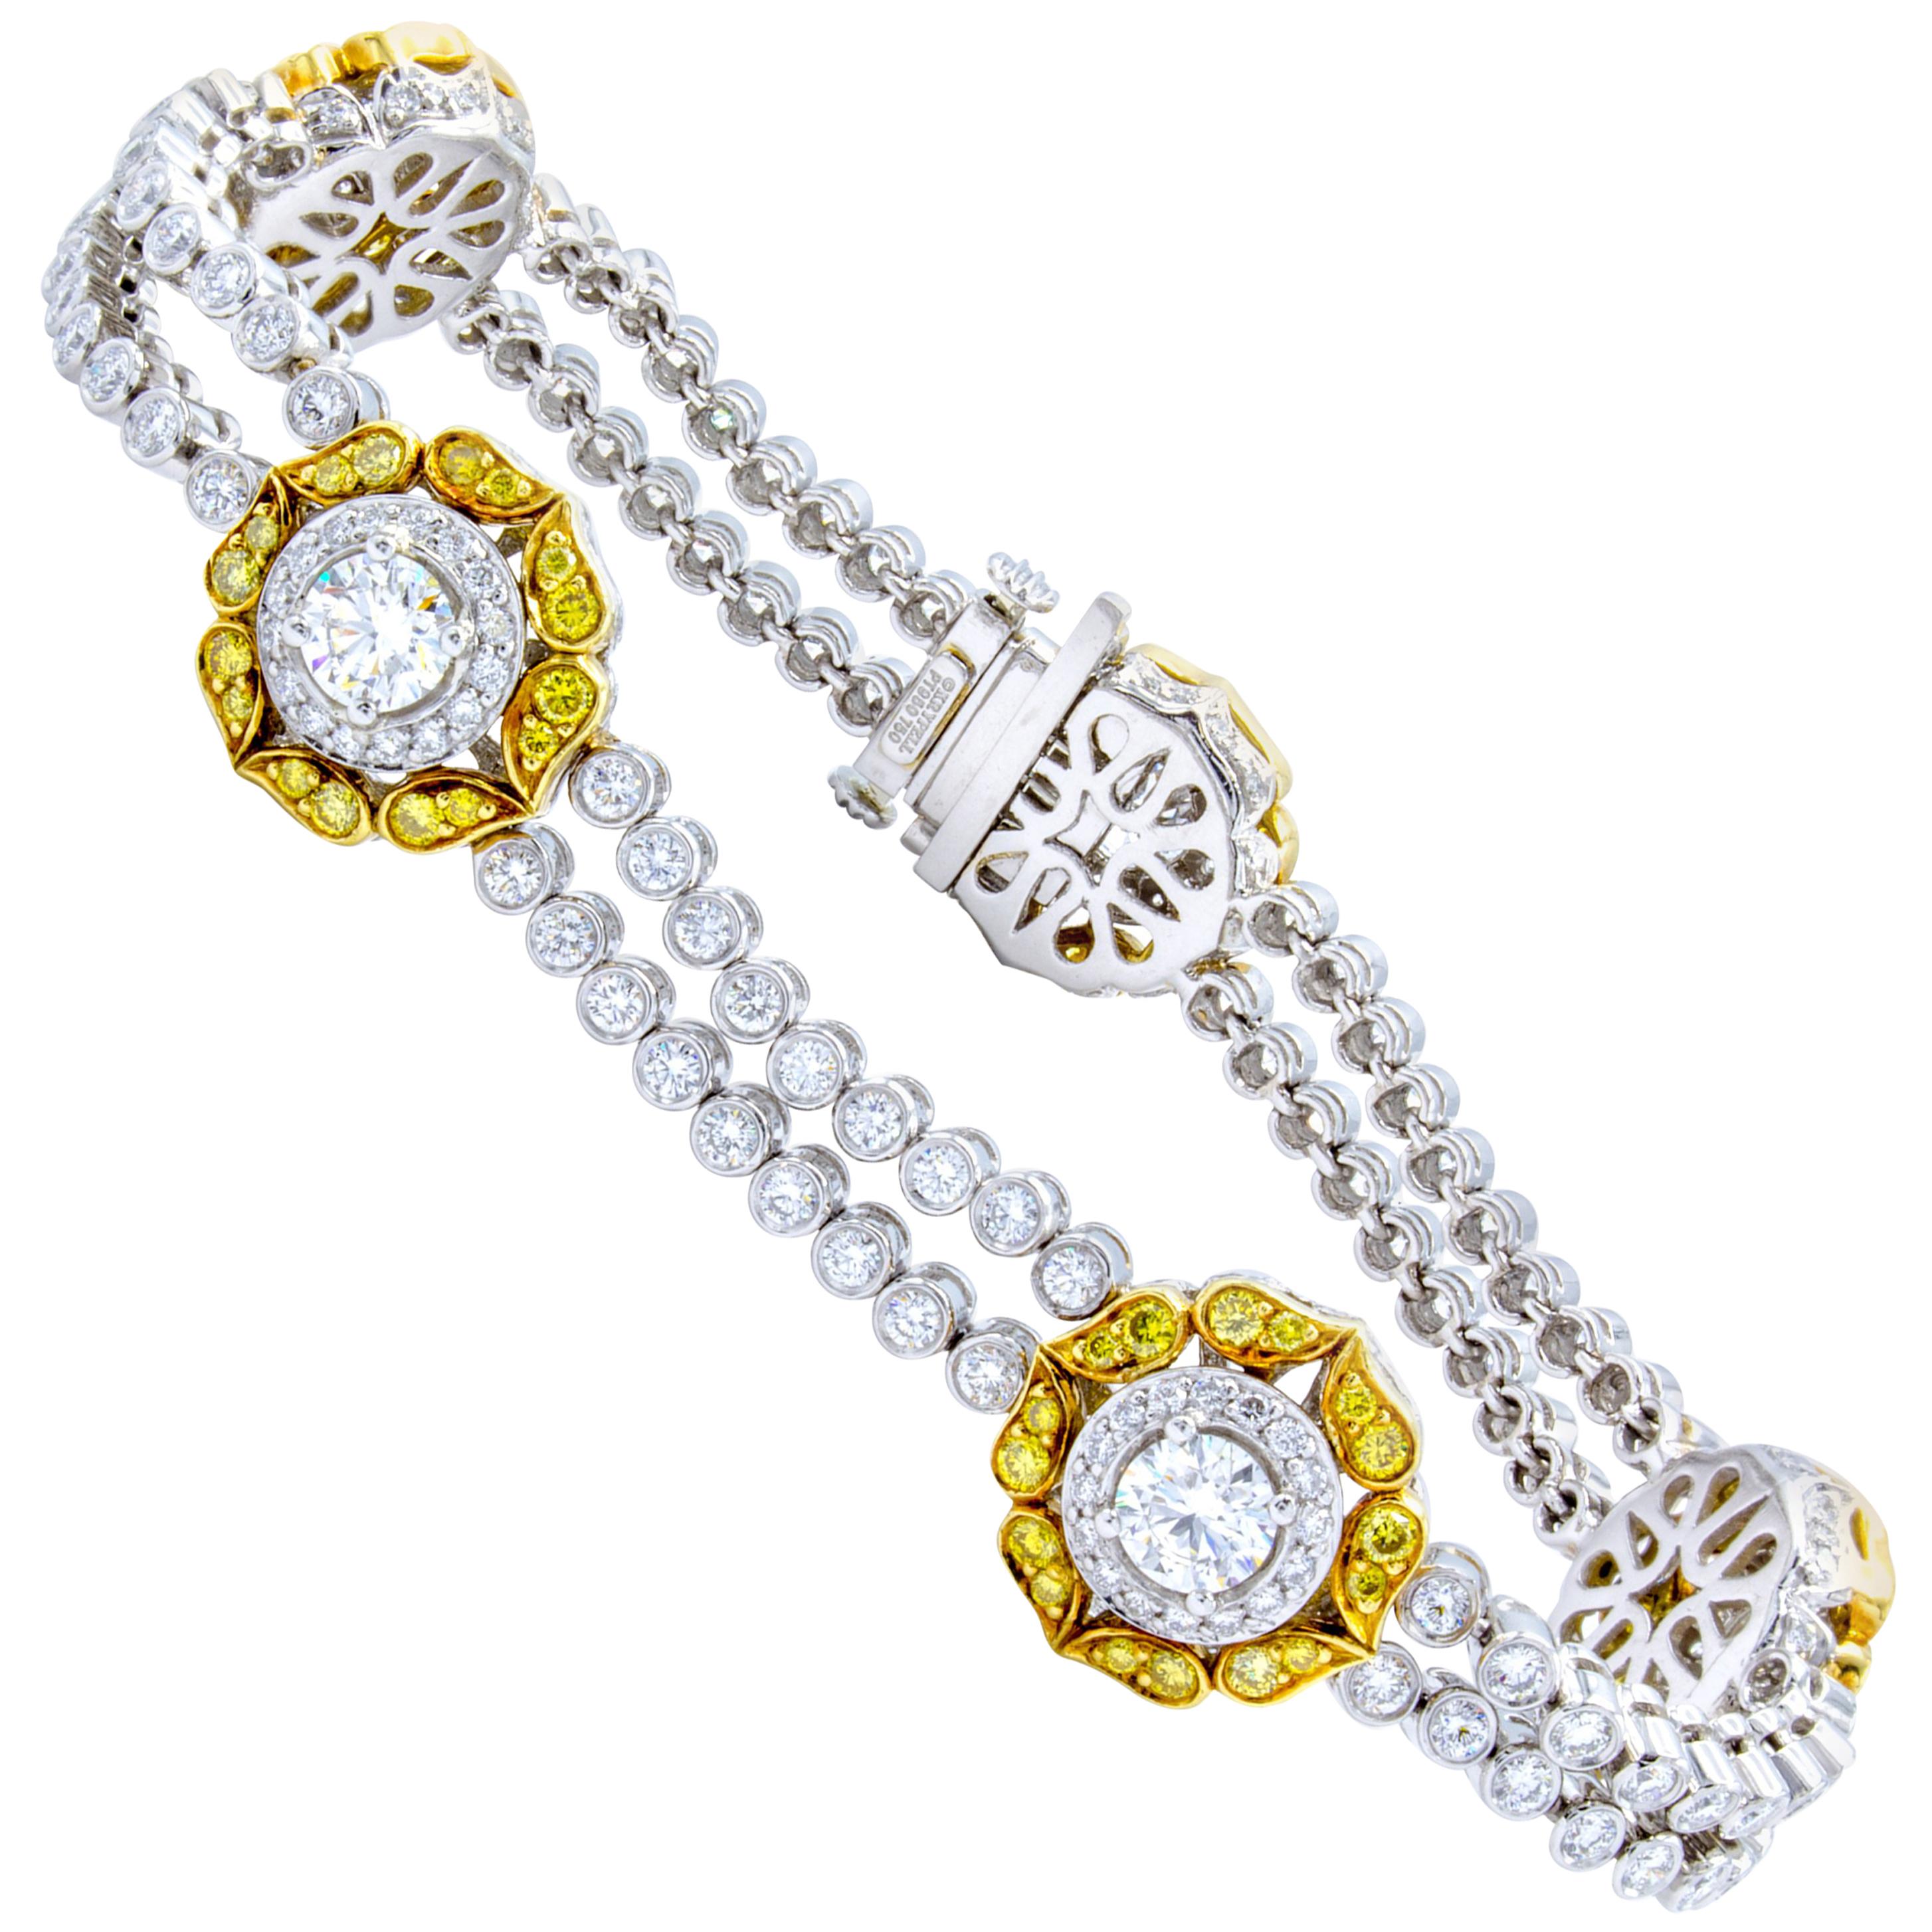 David Rosenberg 5.77 Total Carats White and Natural Fancy Diamond Bracelet